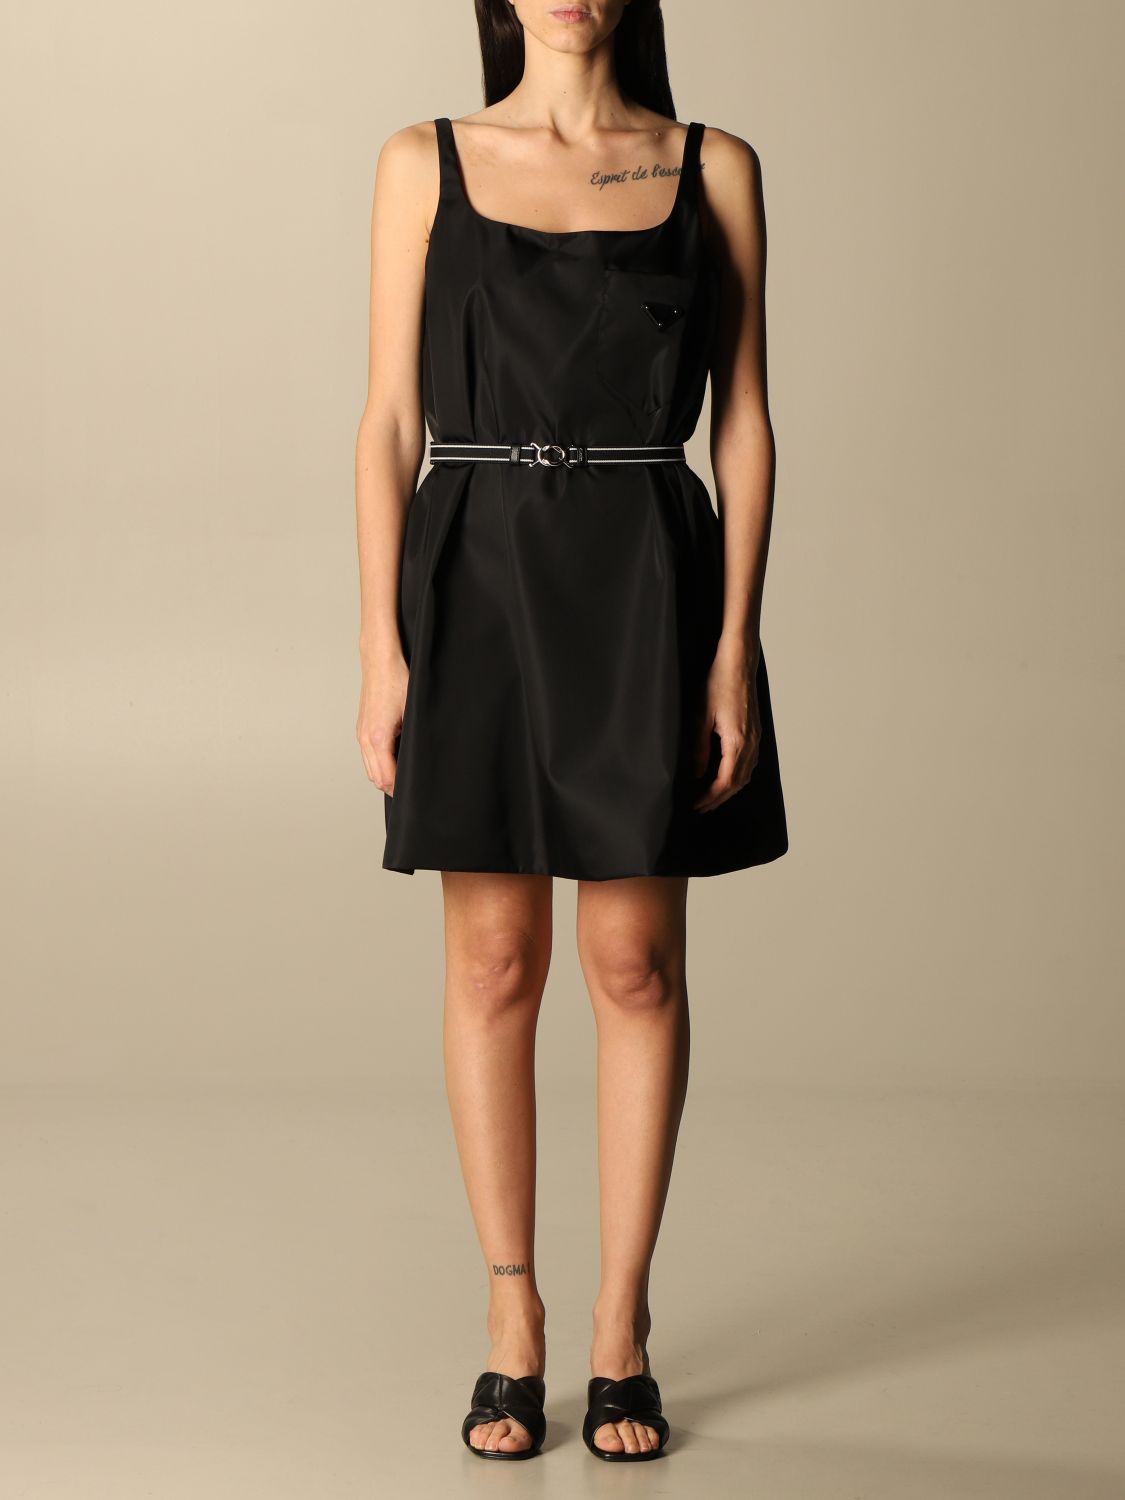 PRADA: nylon gabardine dress with belt - Black | Prada dress 23X621 1WQ8  online on 